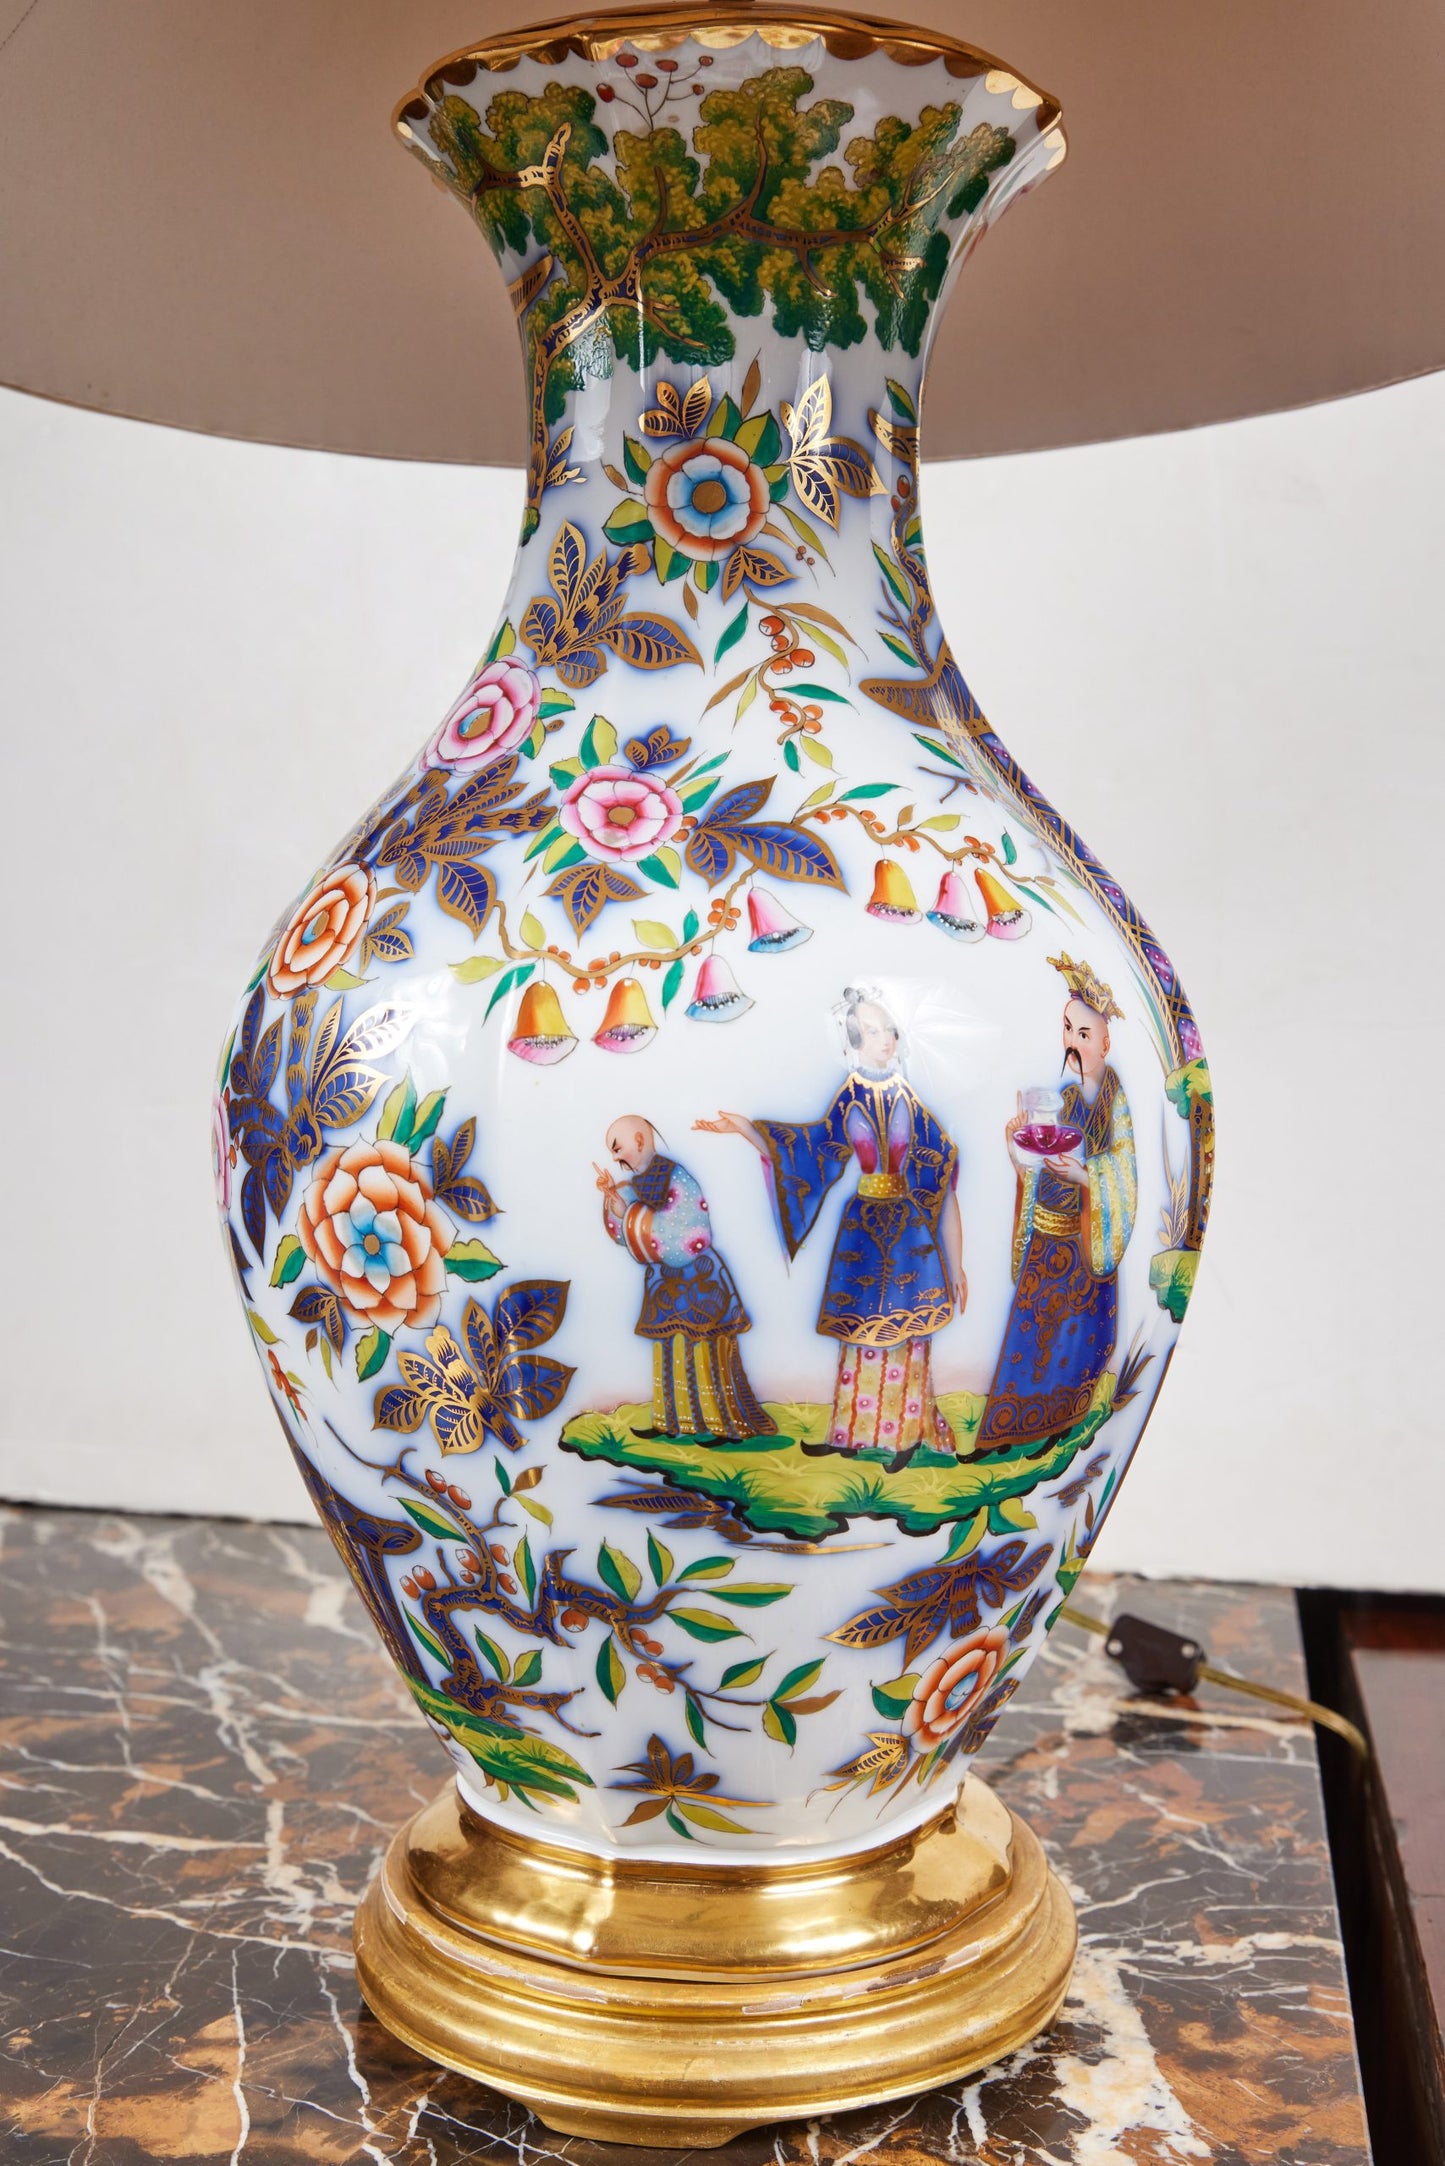 Bayeux Porcelain Table Lamp